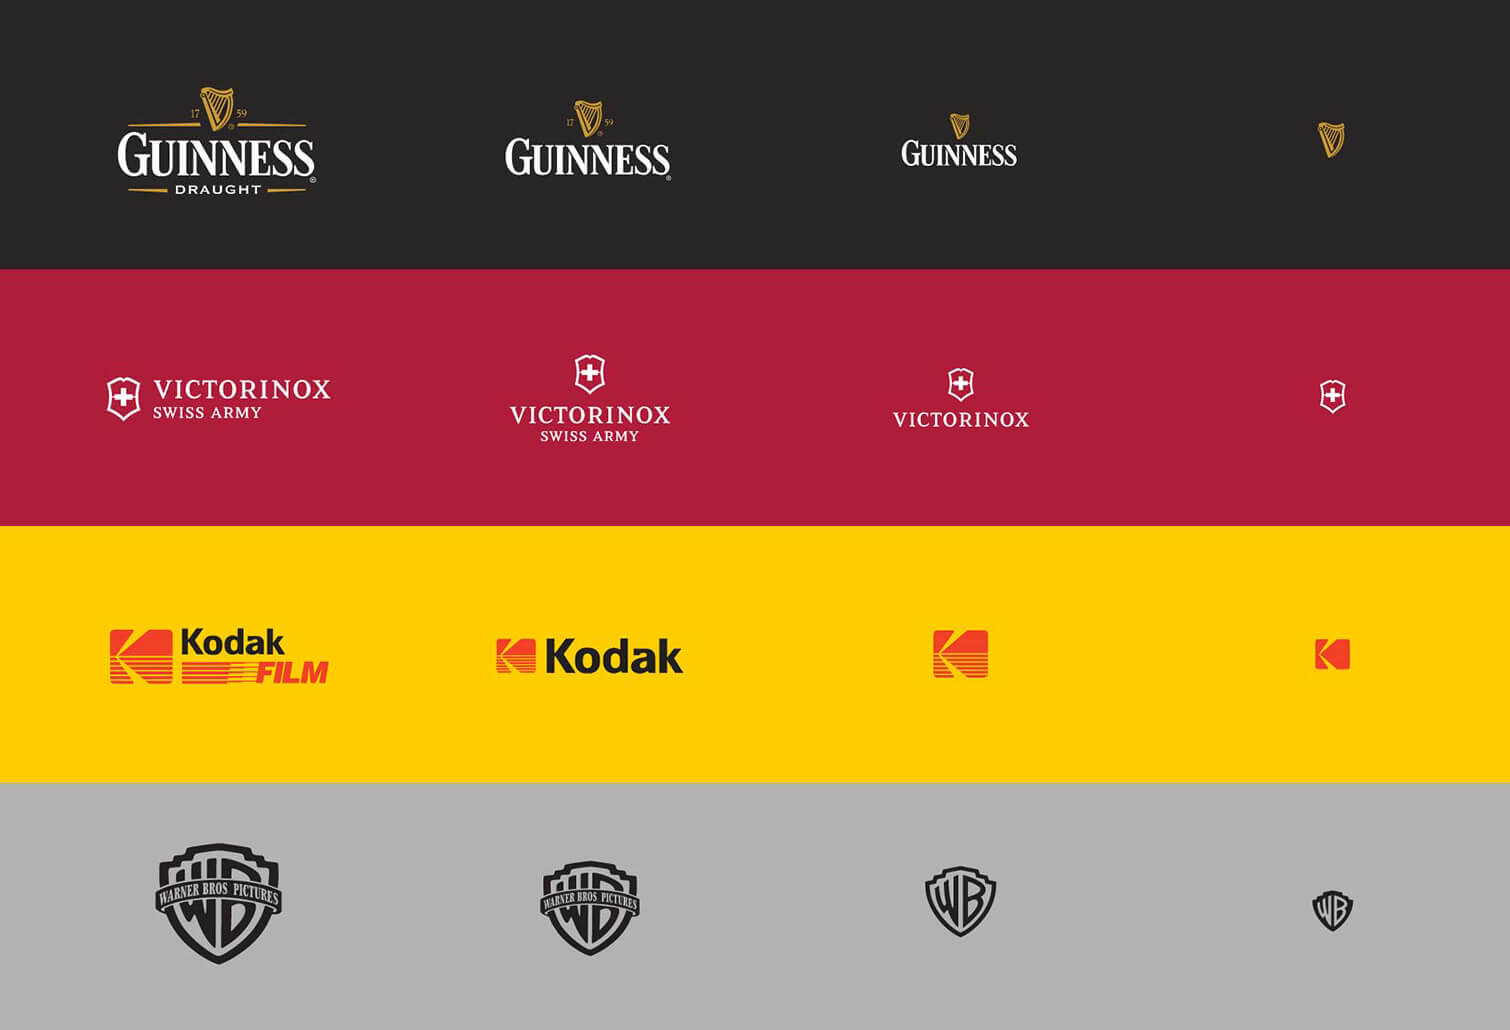 Responsive Logos - Guinness, Swiss Army, Kodak, Warner Bros